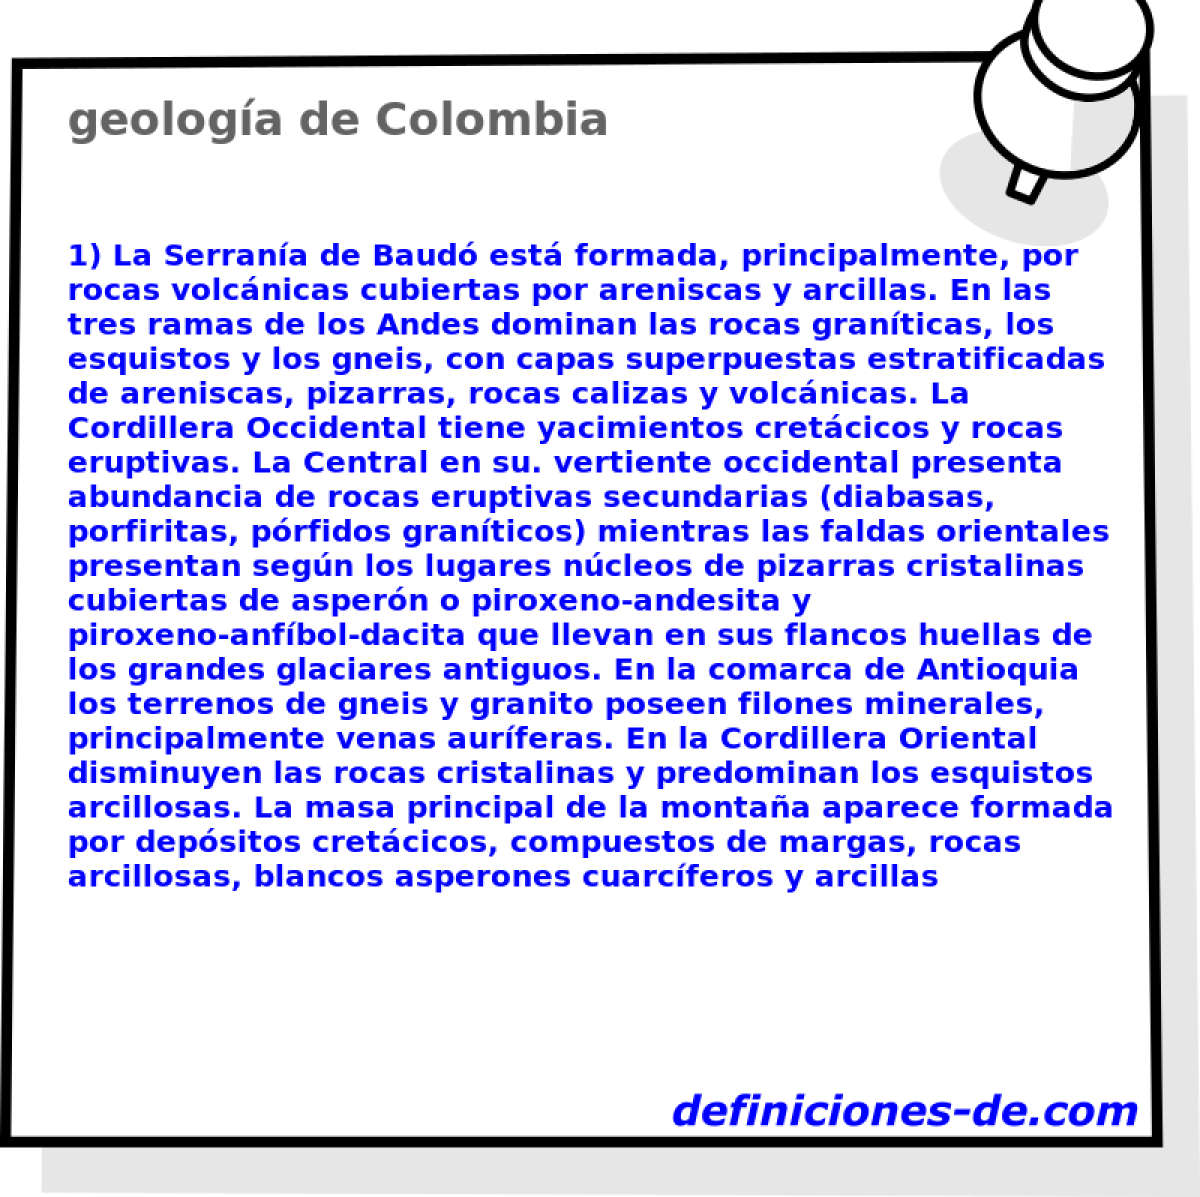 geologa de Colombia 